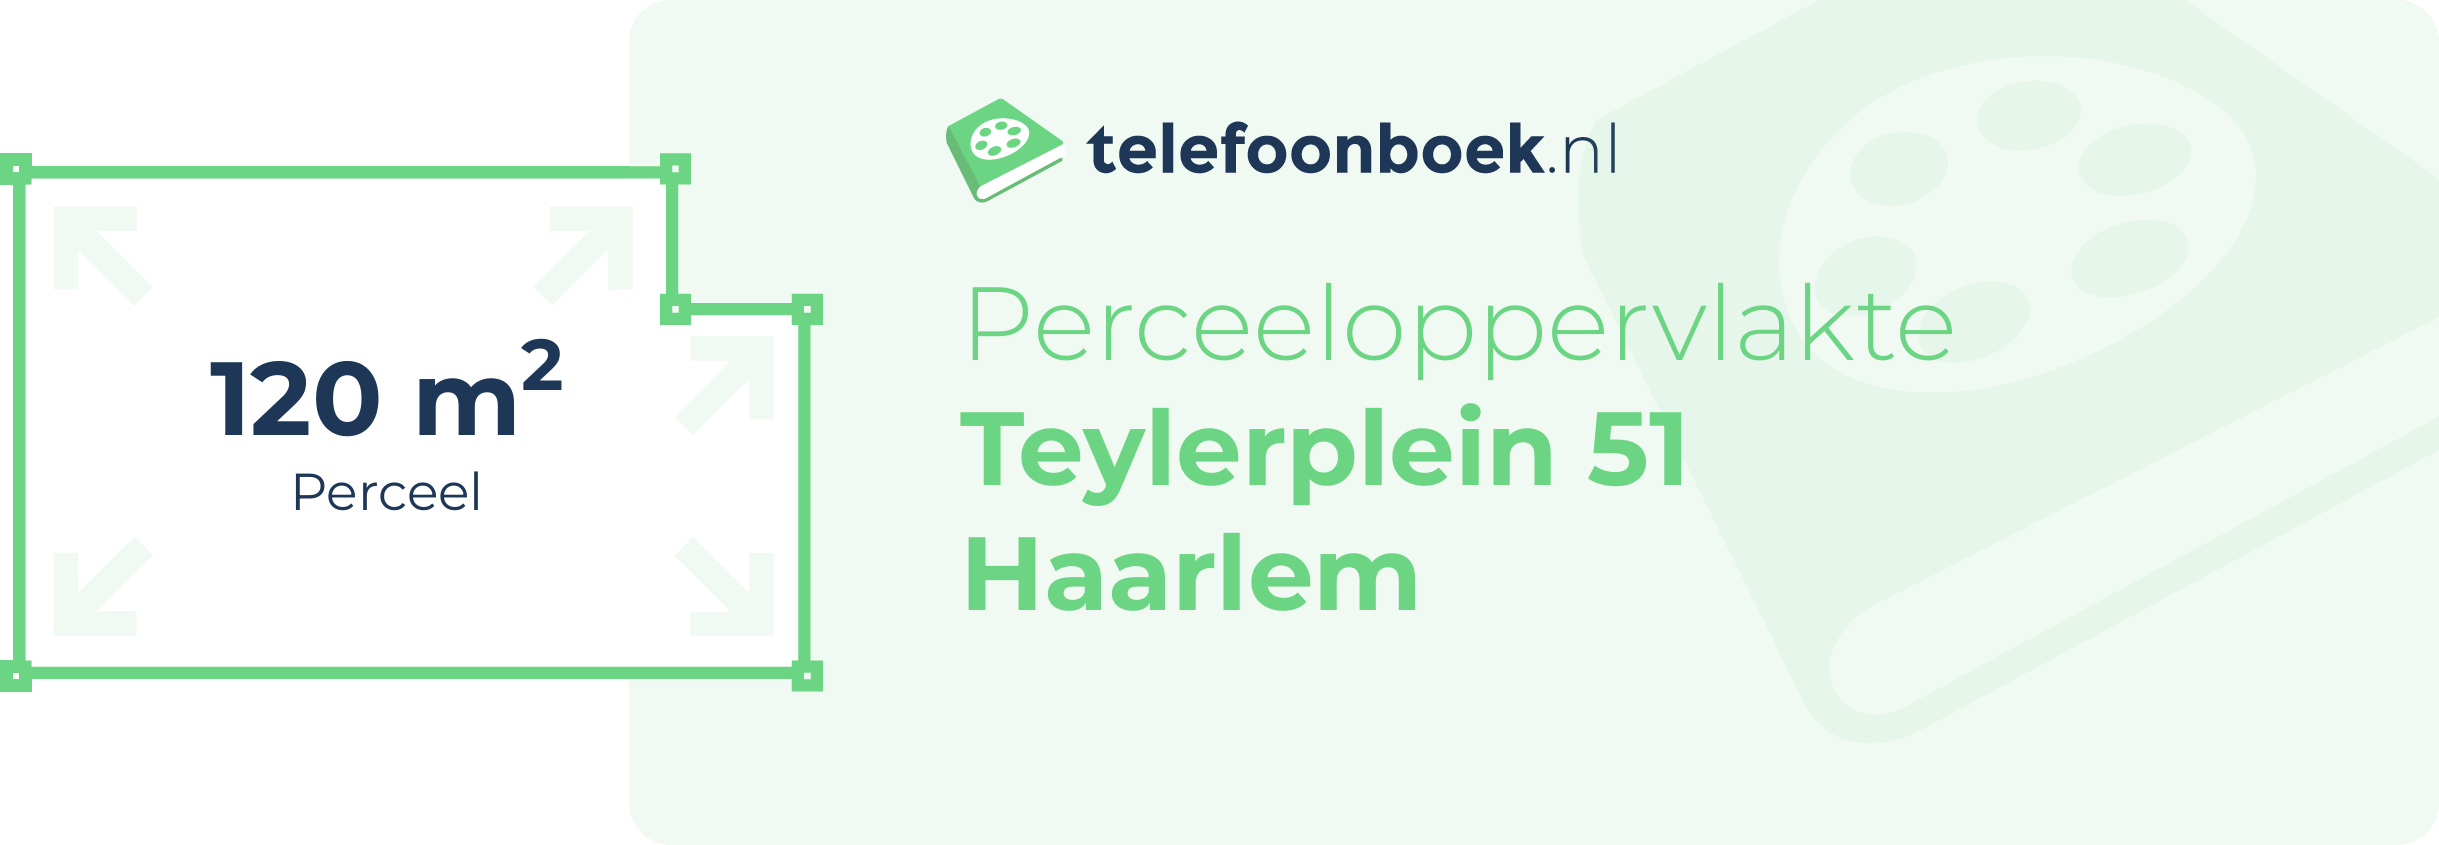 Perceeloppervlakte Teylerplein 51 Haarlem